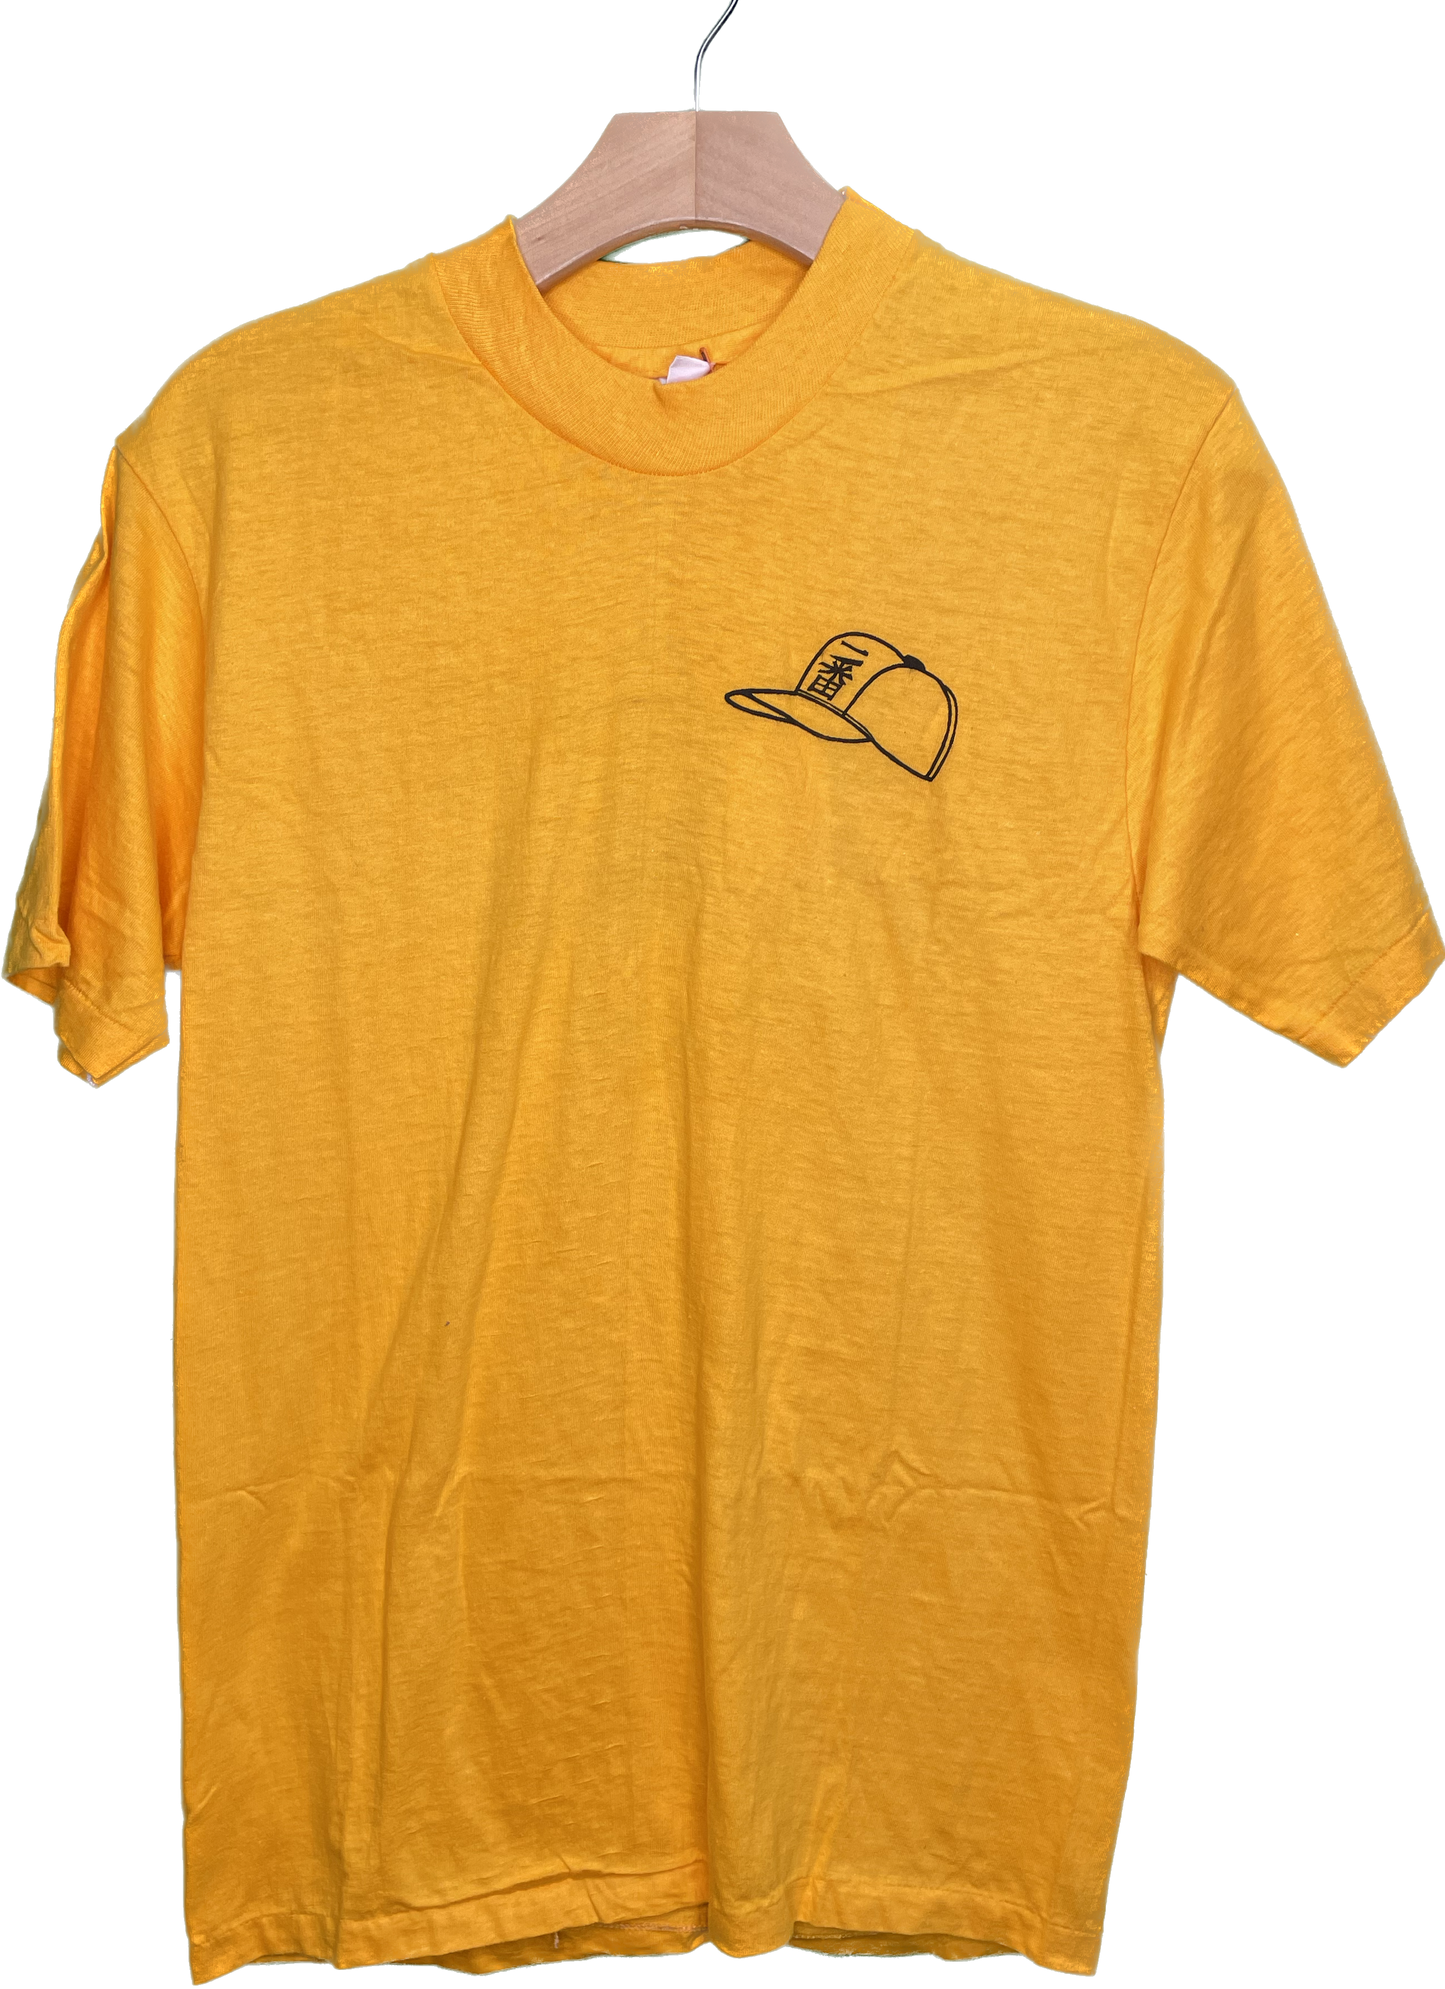 Vintage XS/S 80s Babe Ruth Baseball Arroyo Grande State Tournament T-Shirt